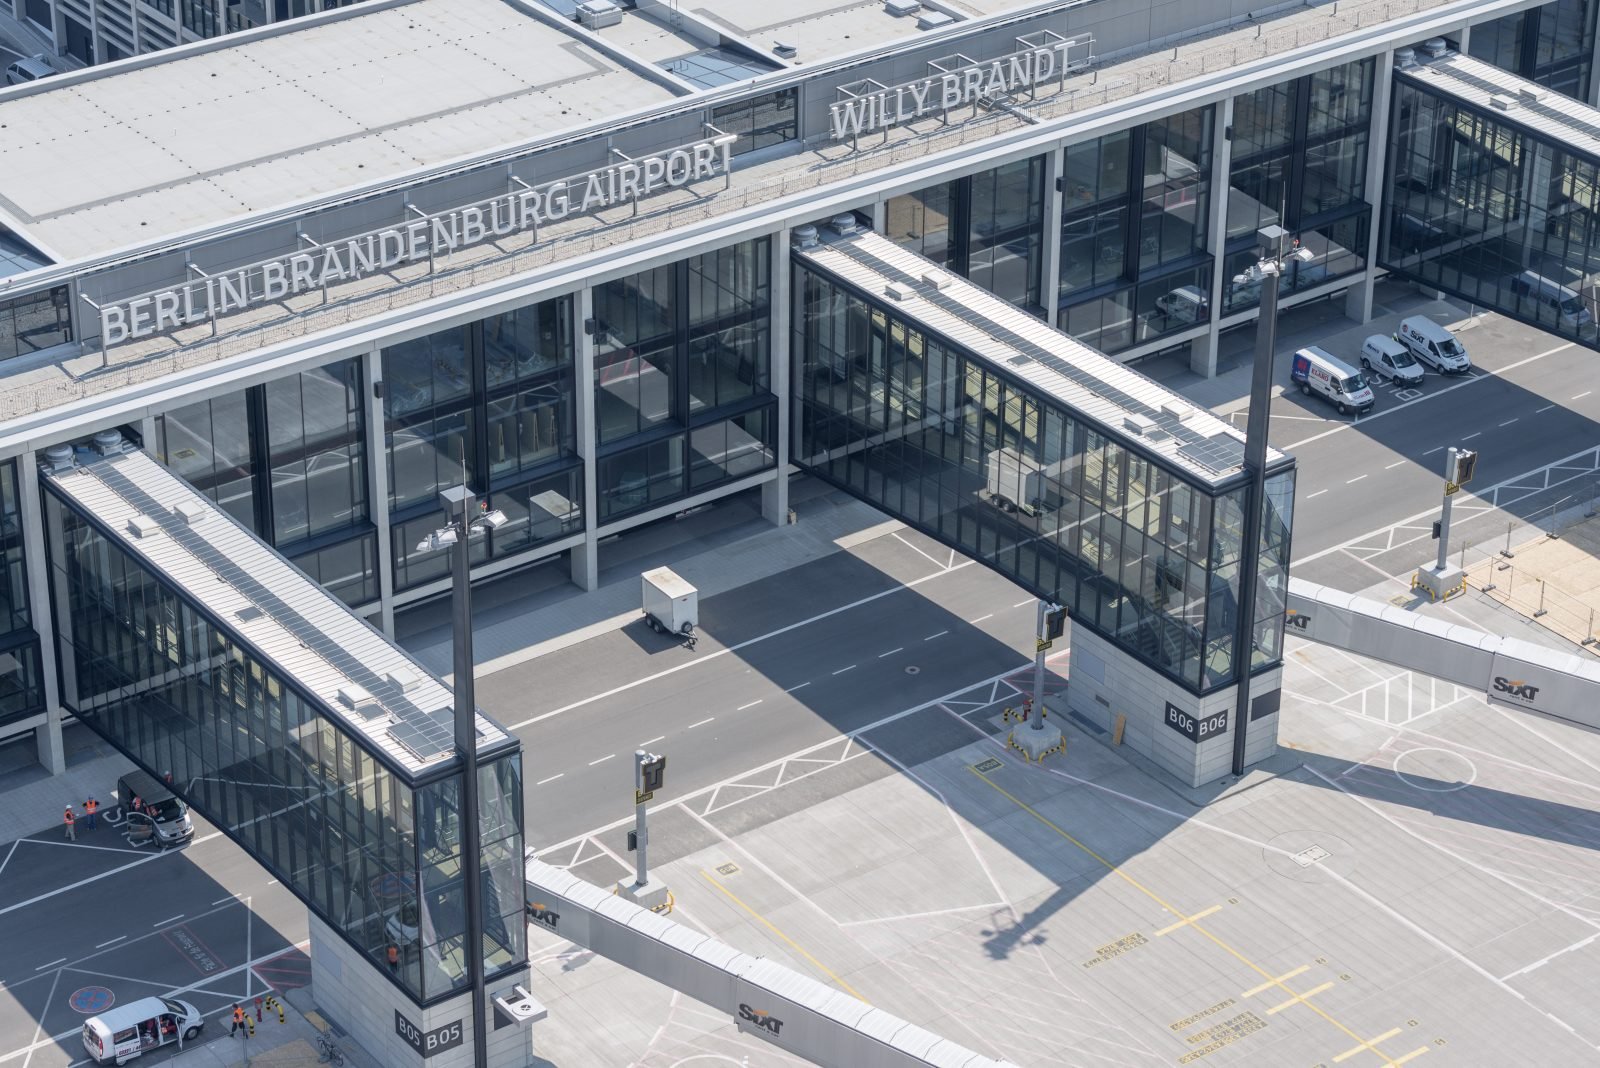 More information about "Ανοίγει μετά από 10 χρόνια καθυστέρηση το διεθνές αεροδρόμιο «BER - Βίλι Μπραντ» του Βερολίνου"